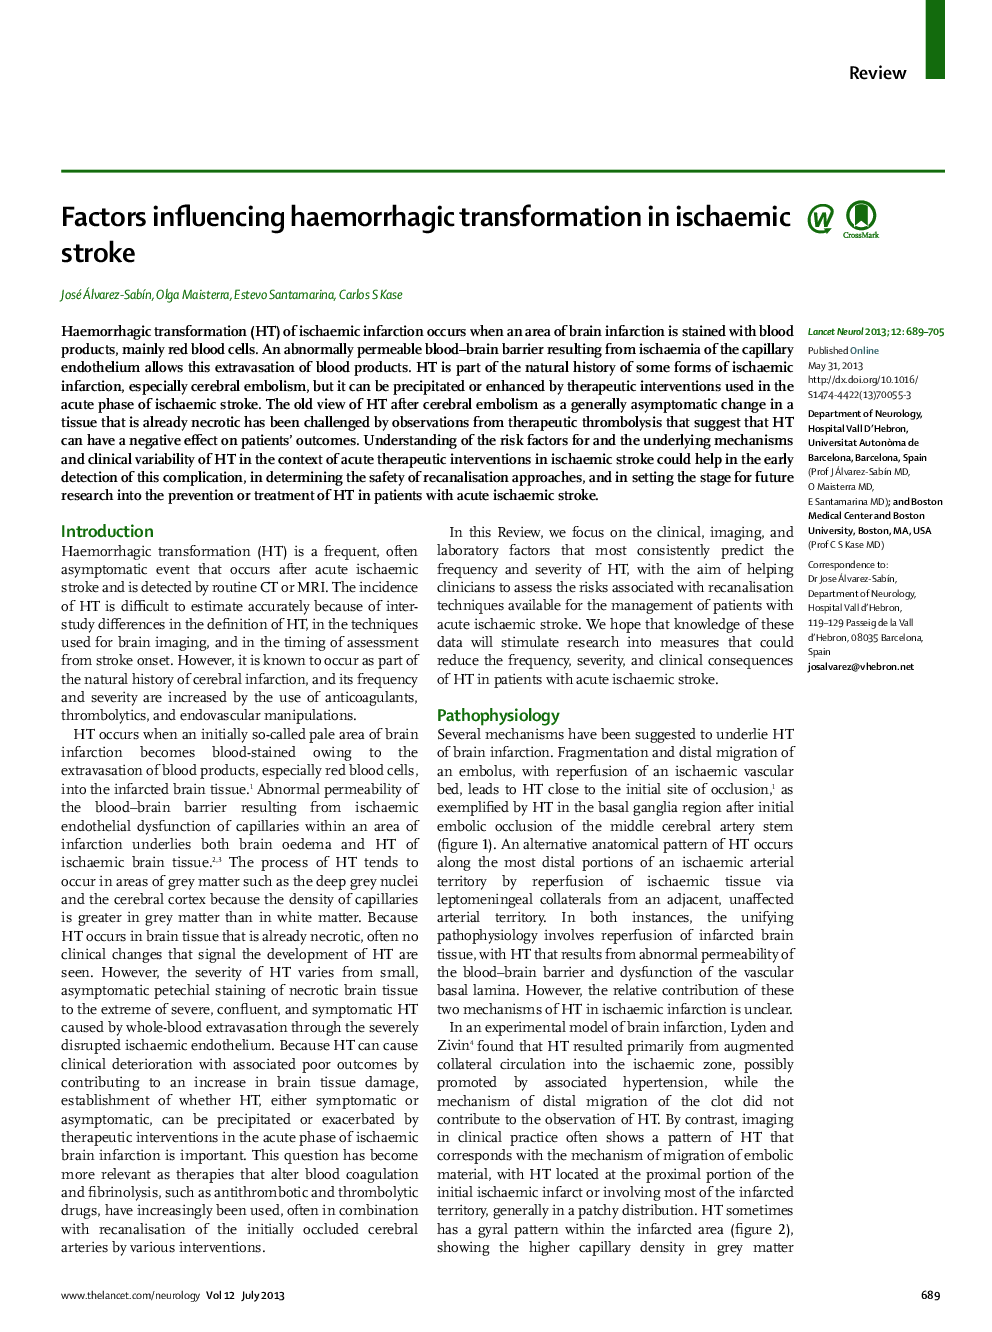 Factors influencing haemorrhagic transformation in ischaemic stroke